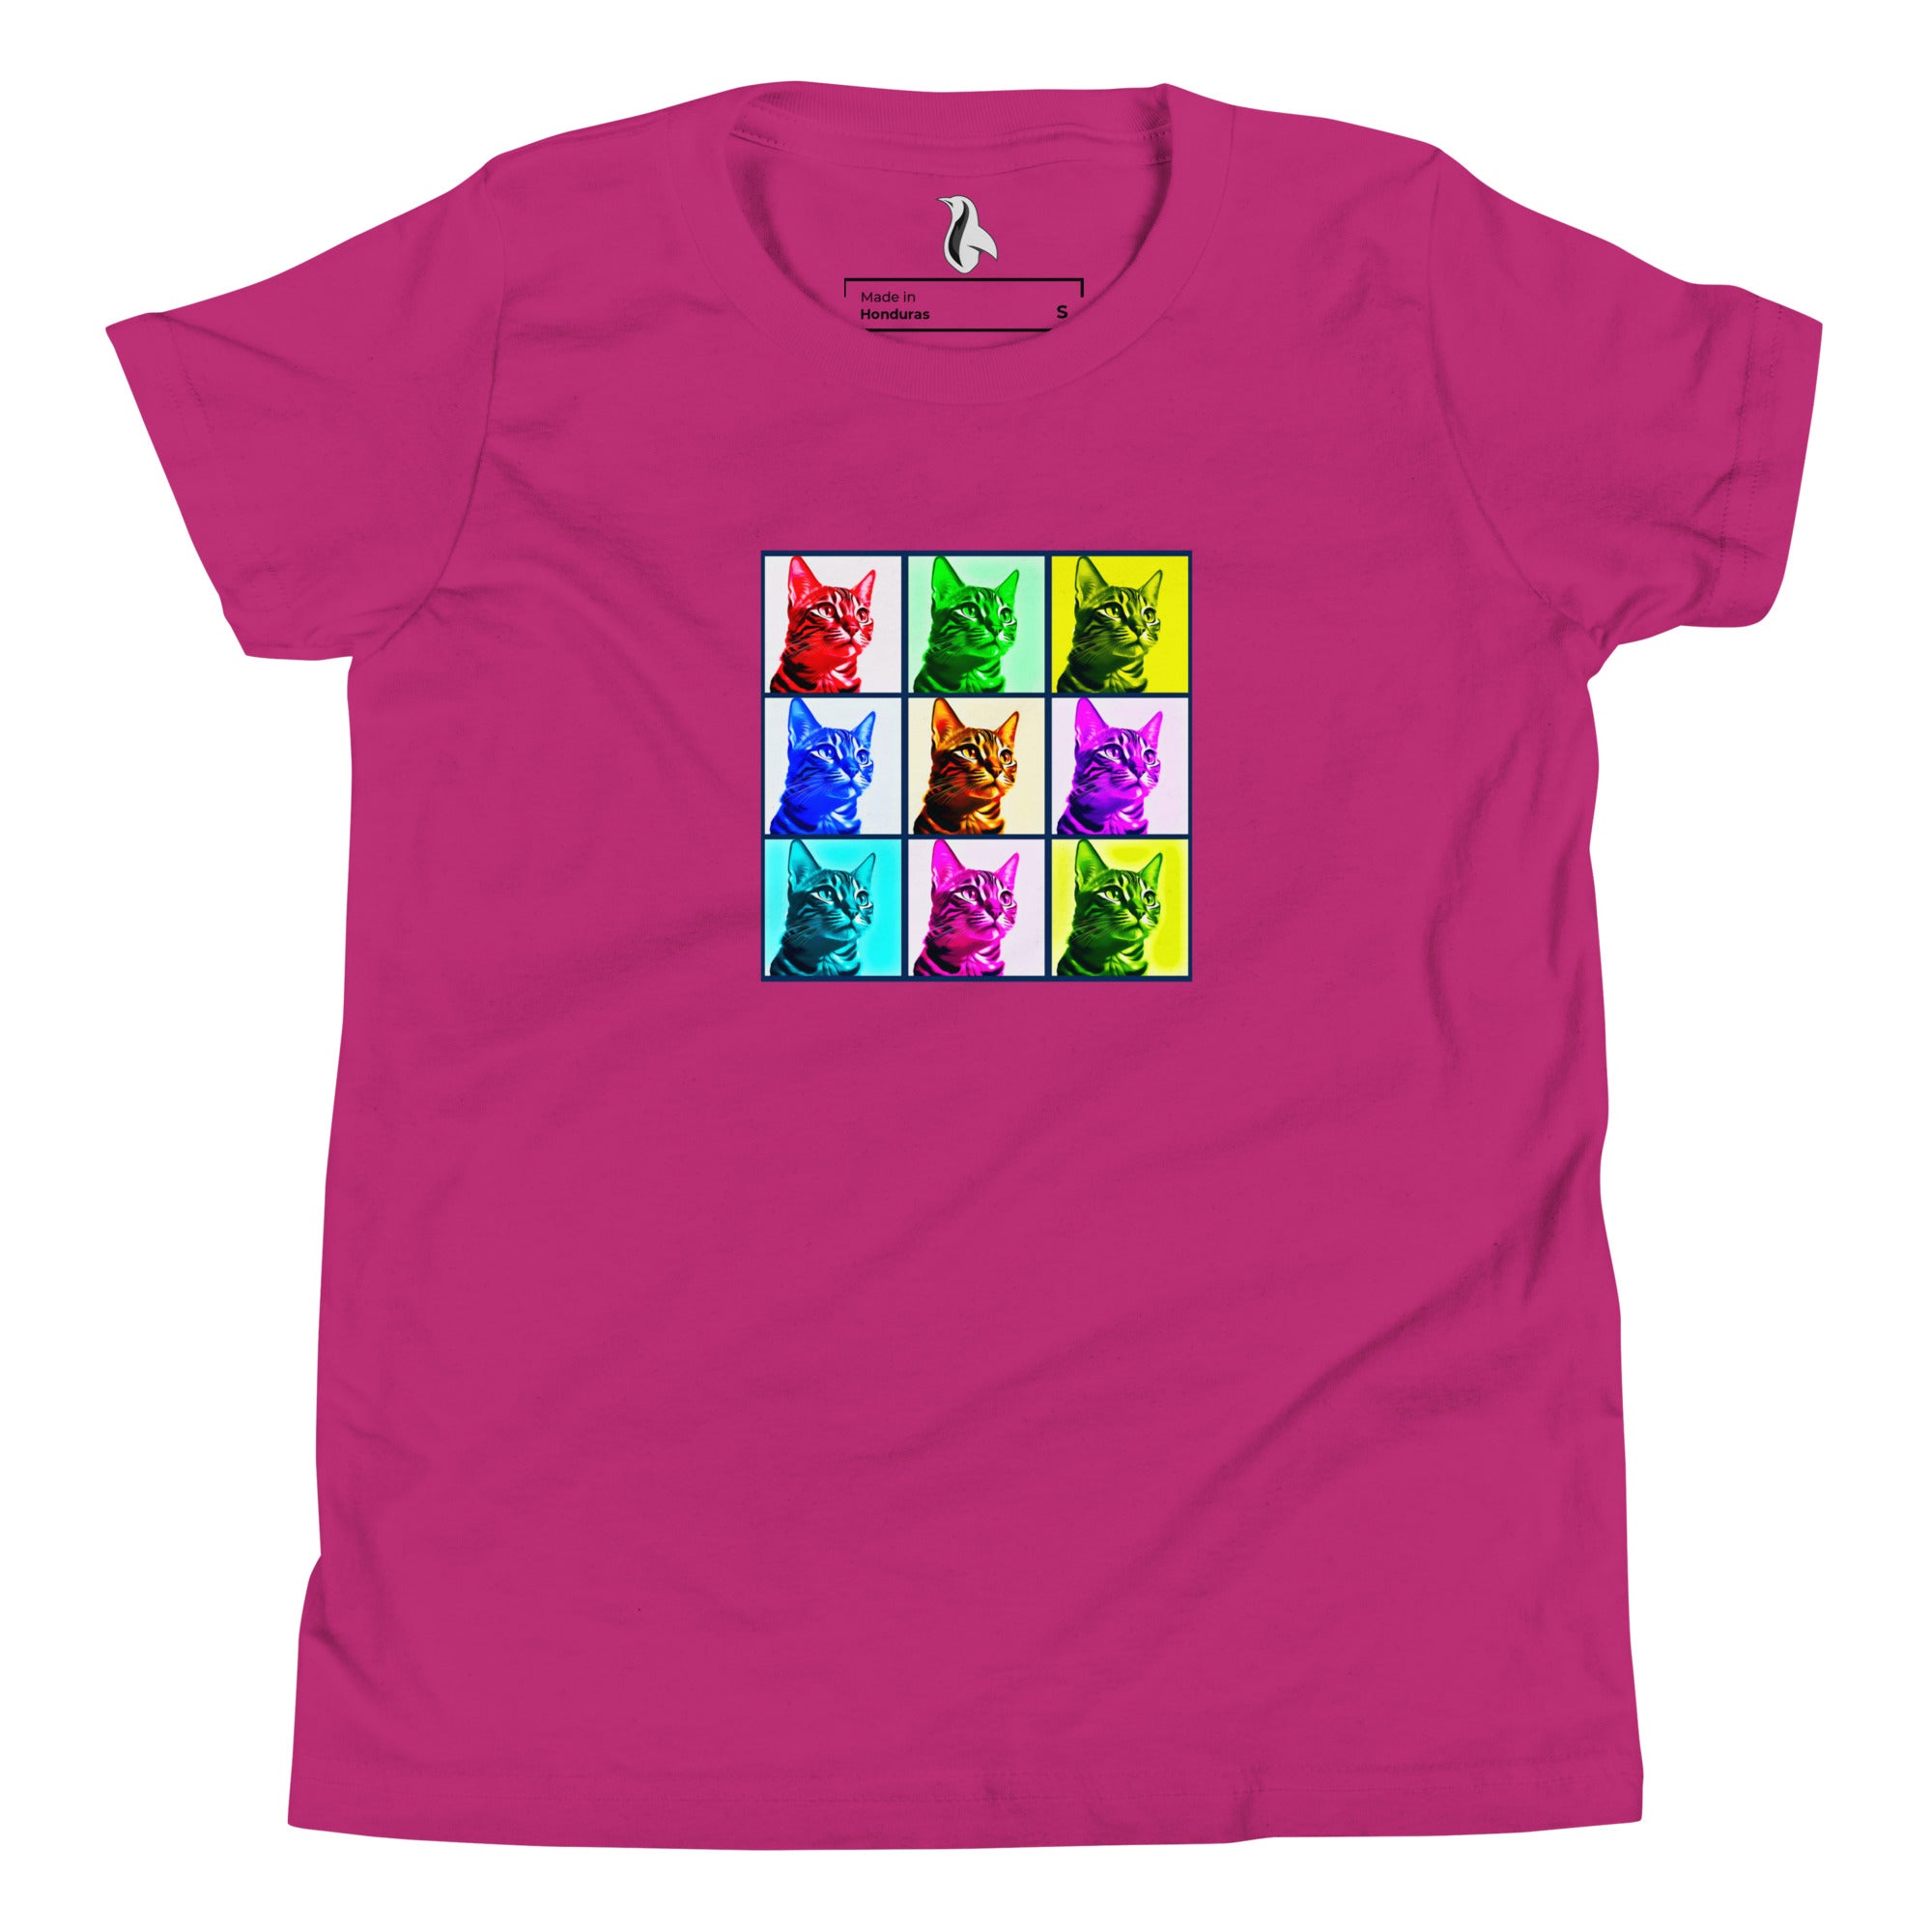 Warhol Cats Youth Short Sleeve T-Shirt